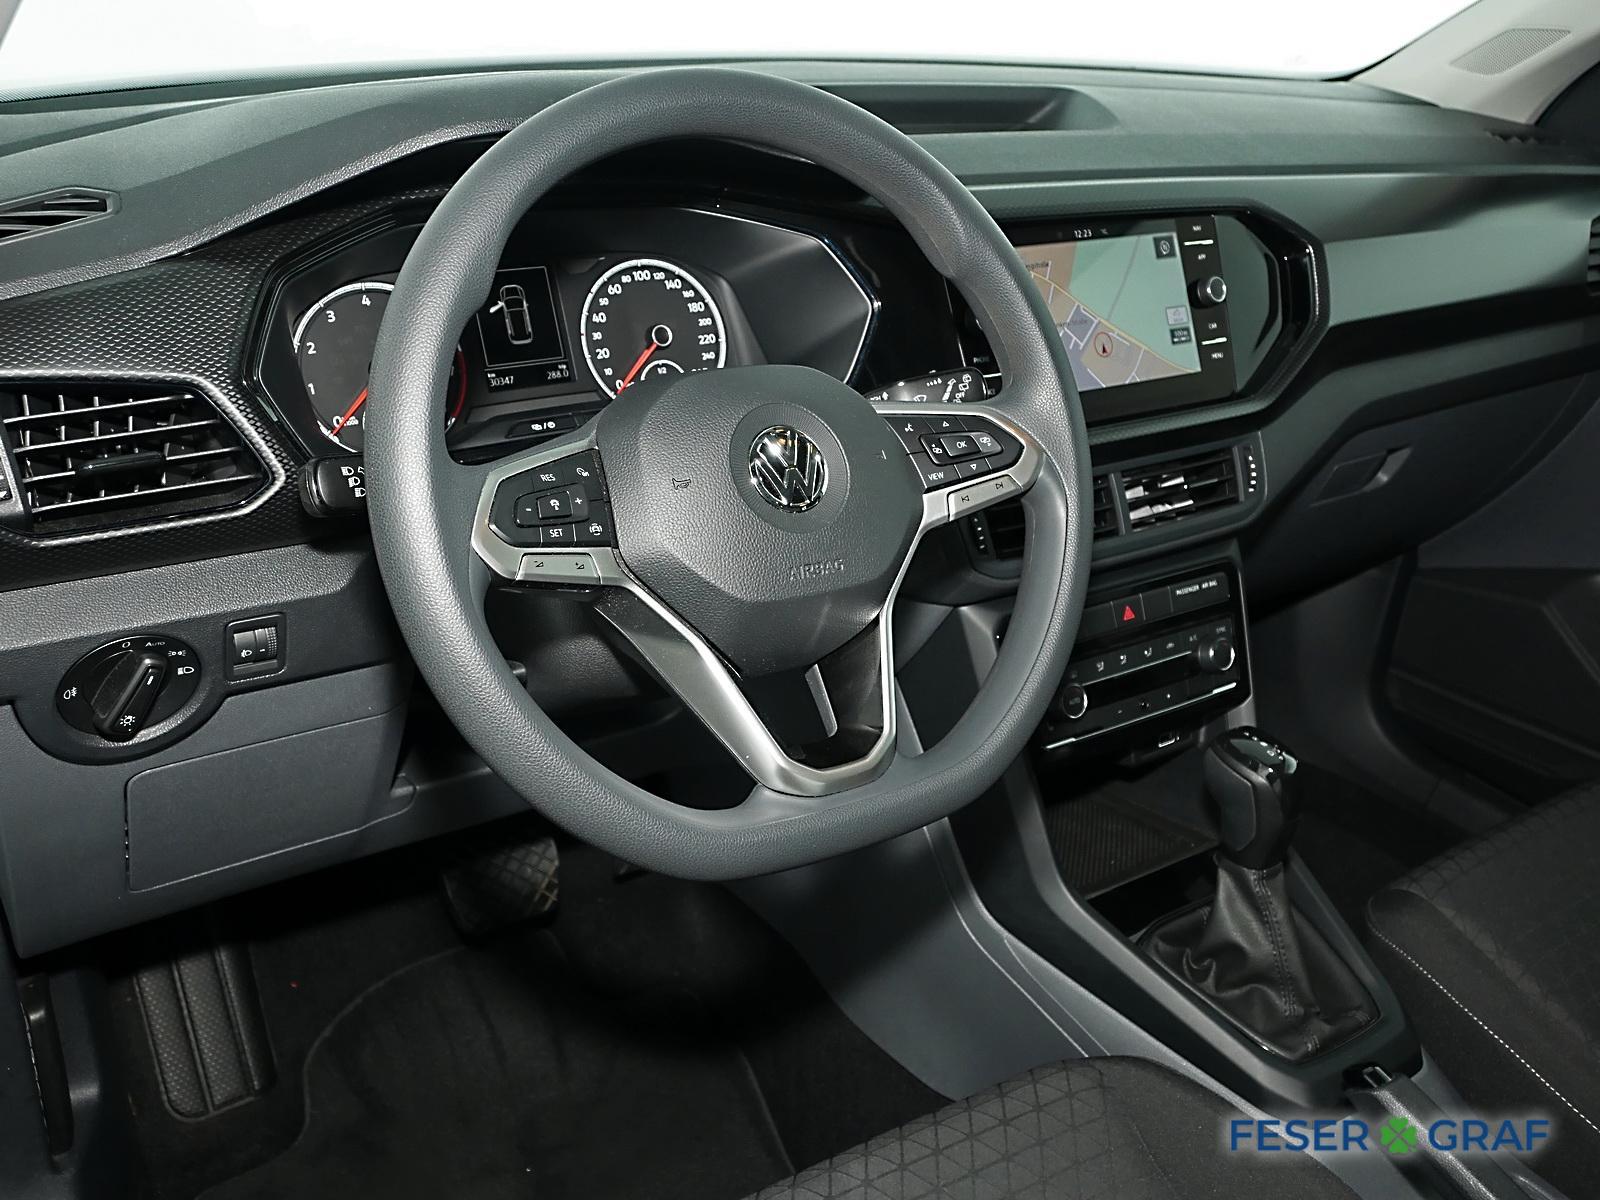 VW T-CROSS Gebraucht, Benzin, Automatik, FzN: VM-237157 🍀 Feser-Graf  Fahrzeugsuche